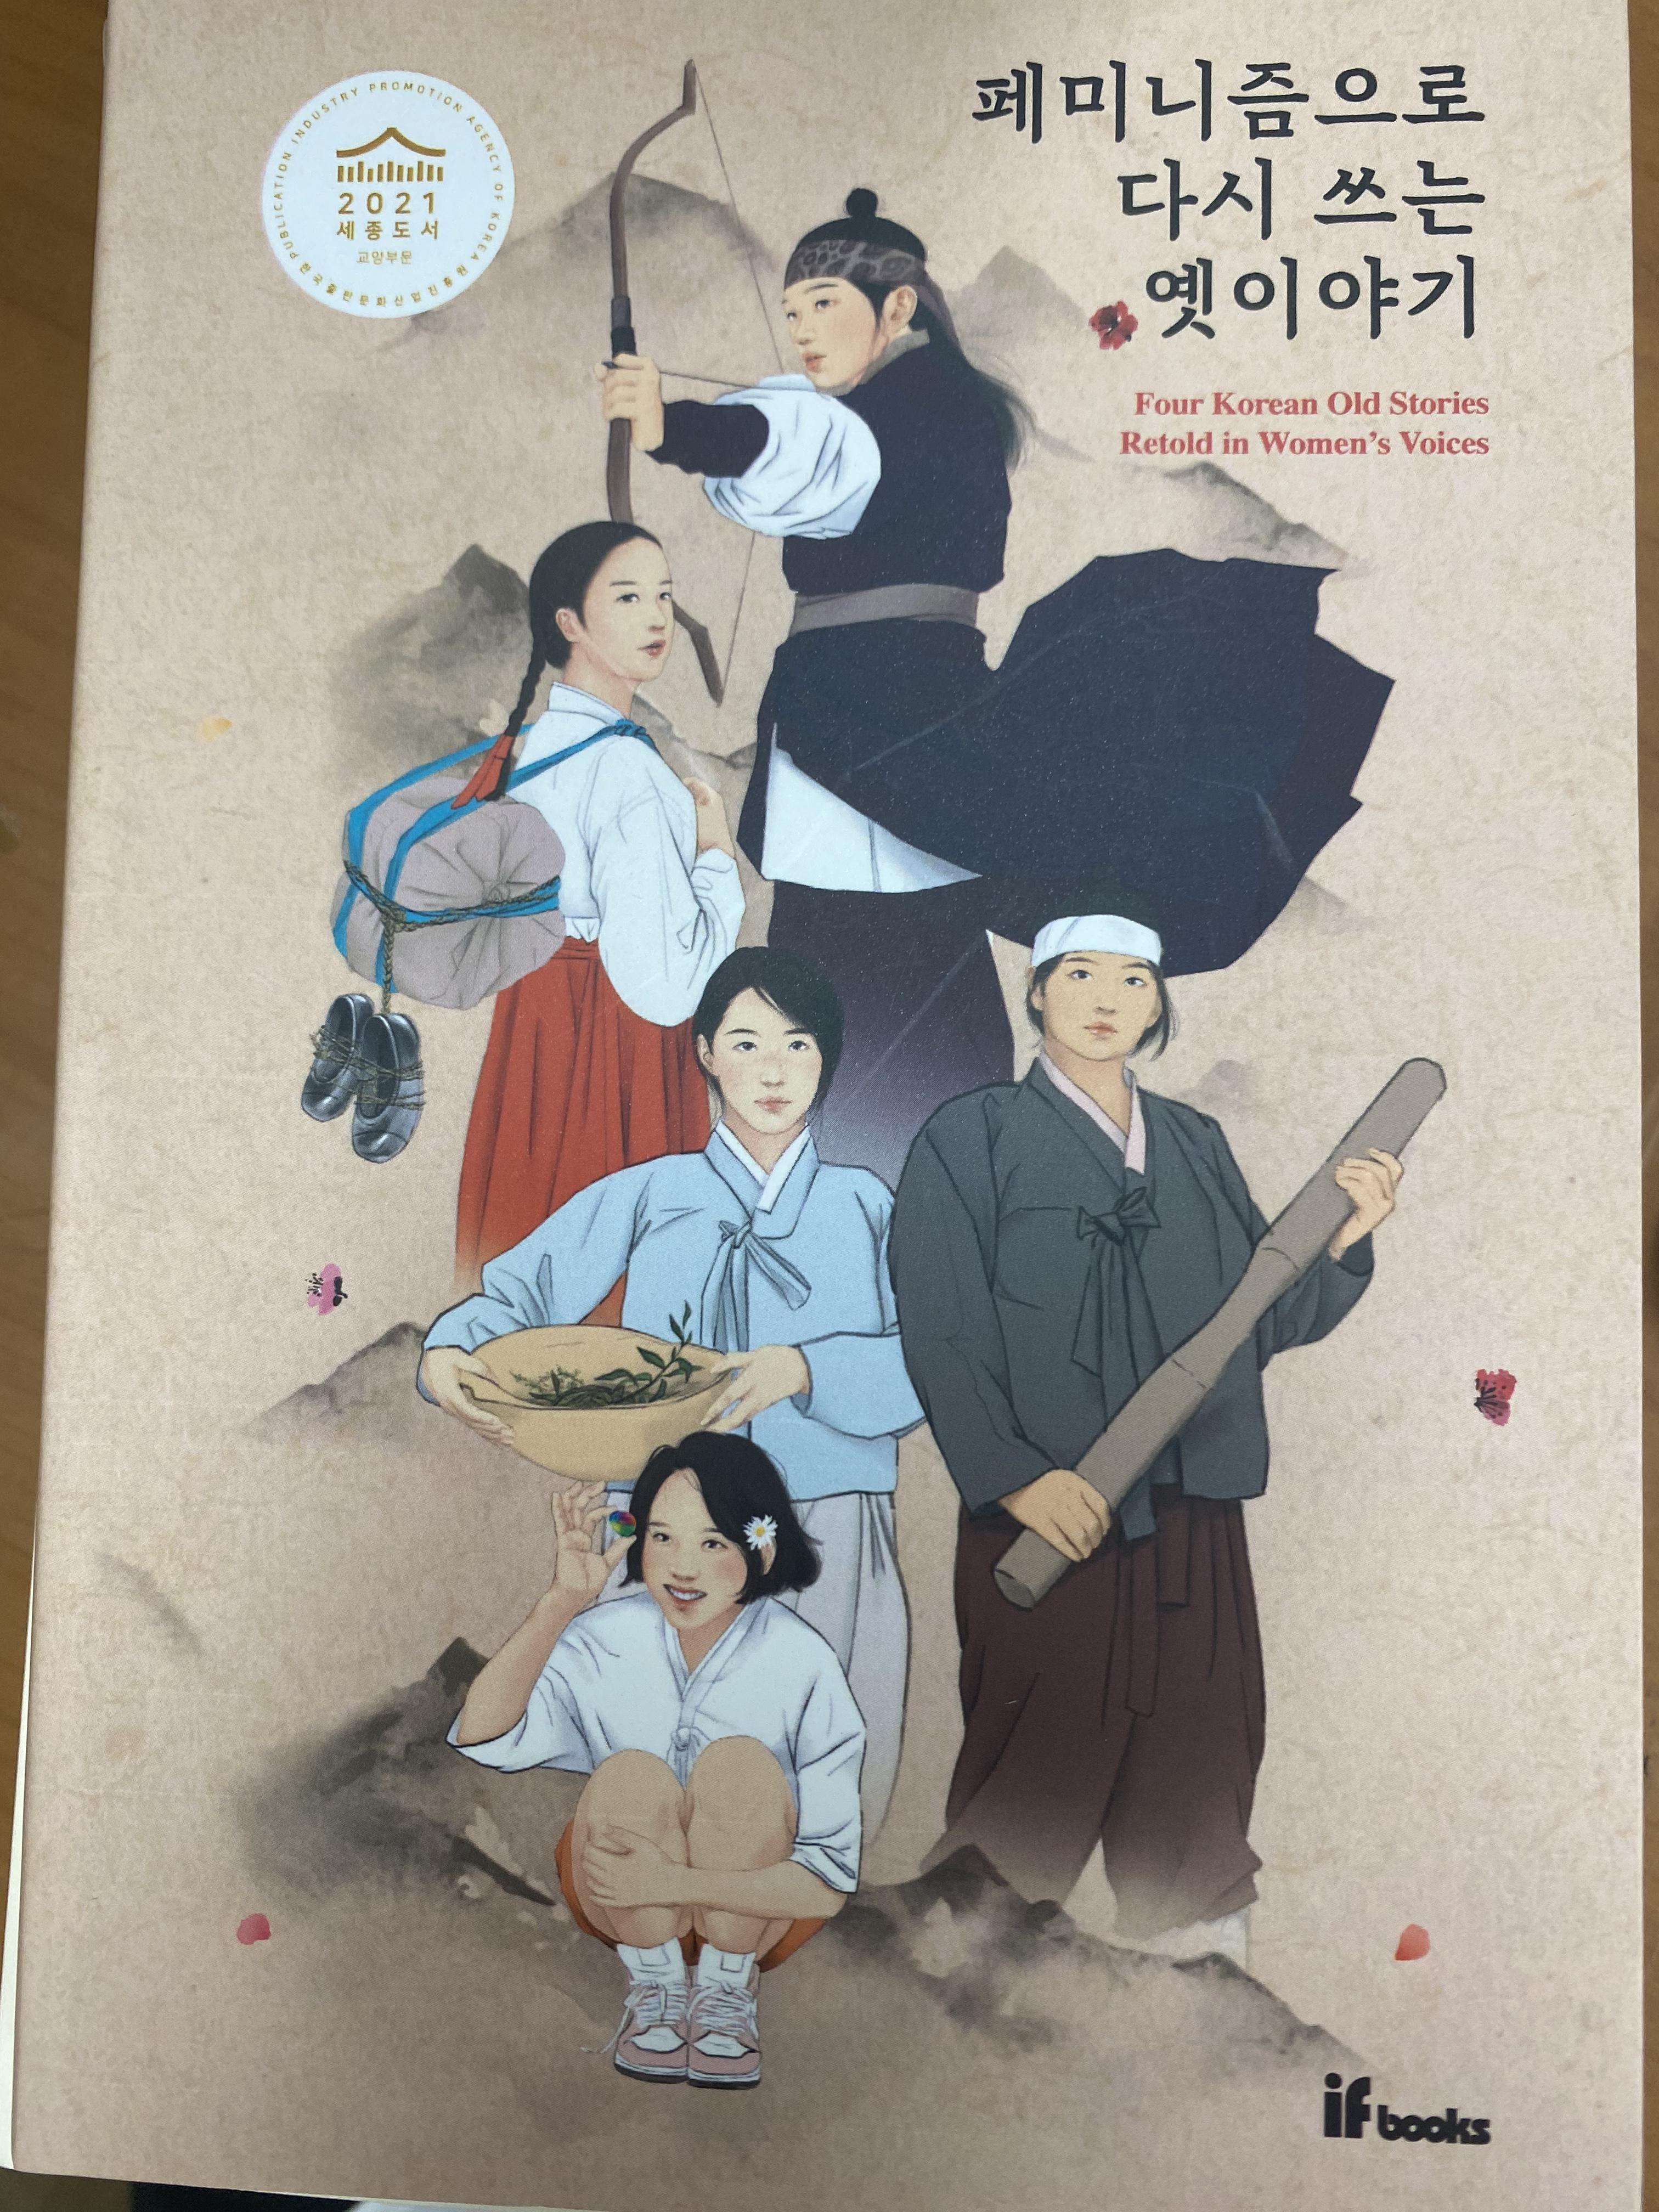 Sejong Book Selected This Year